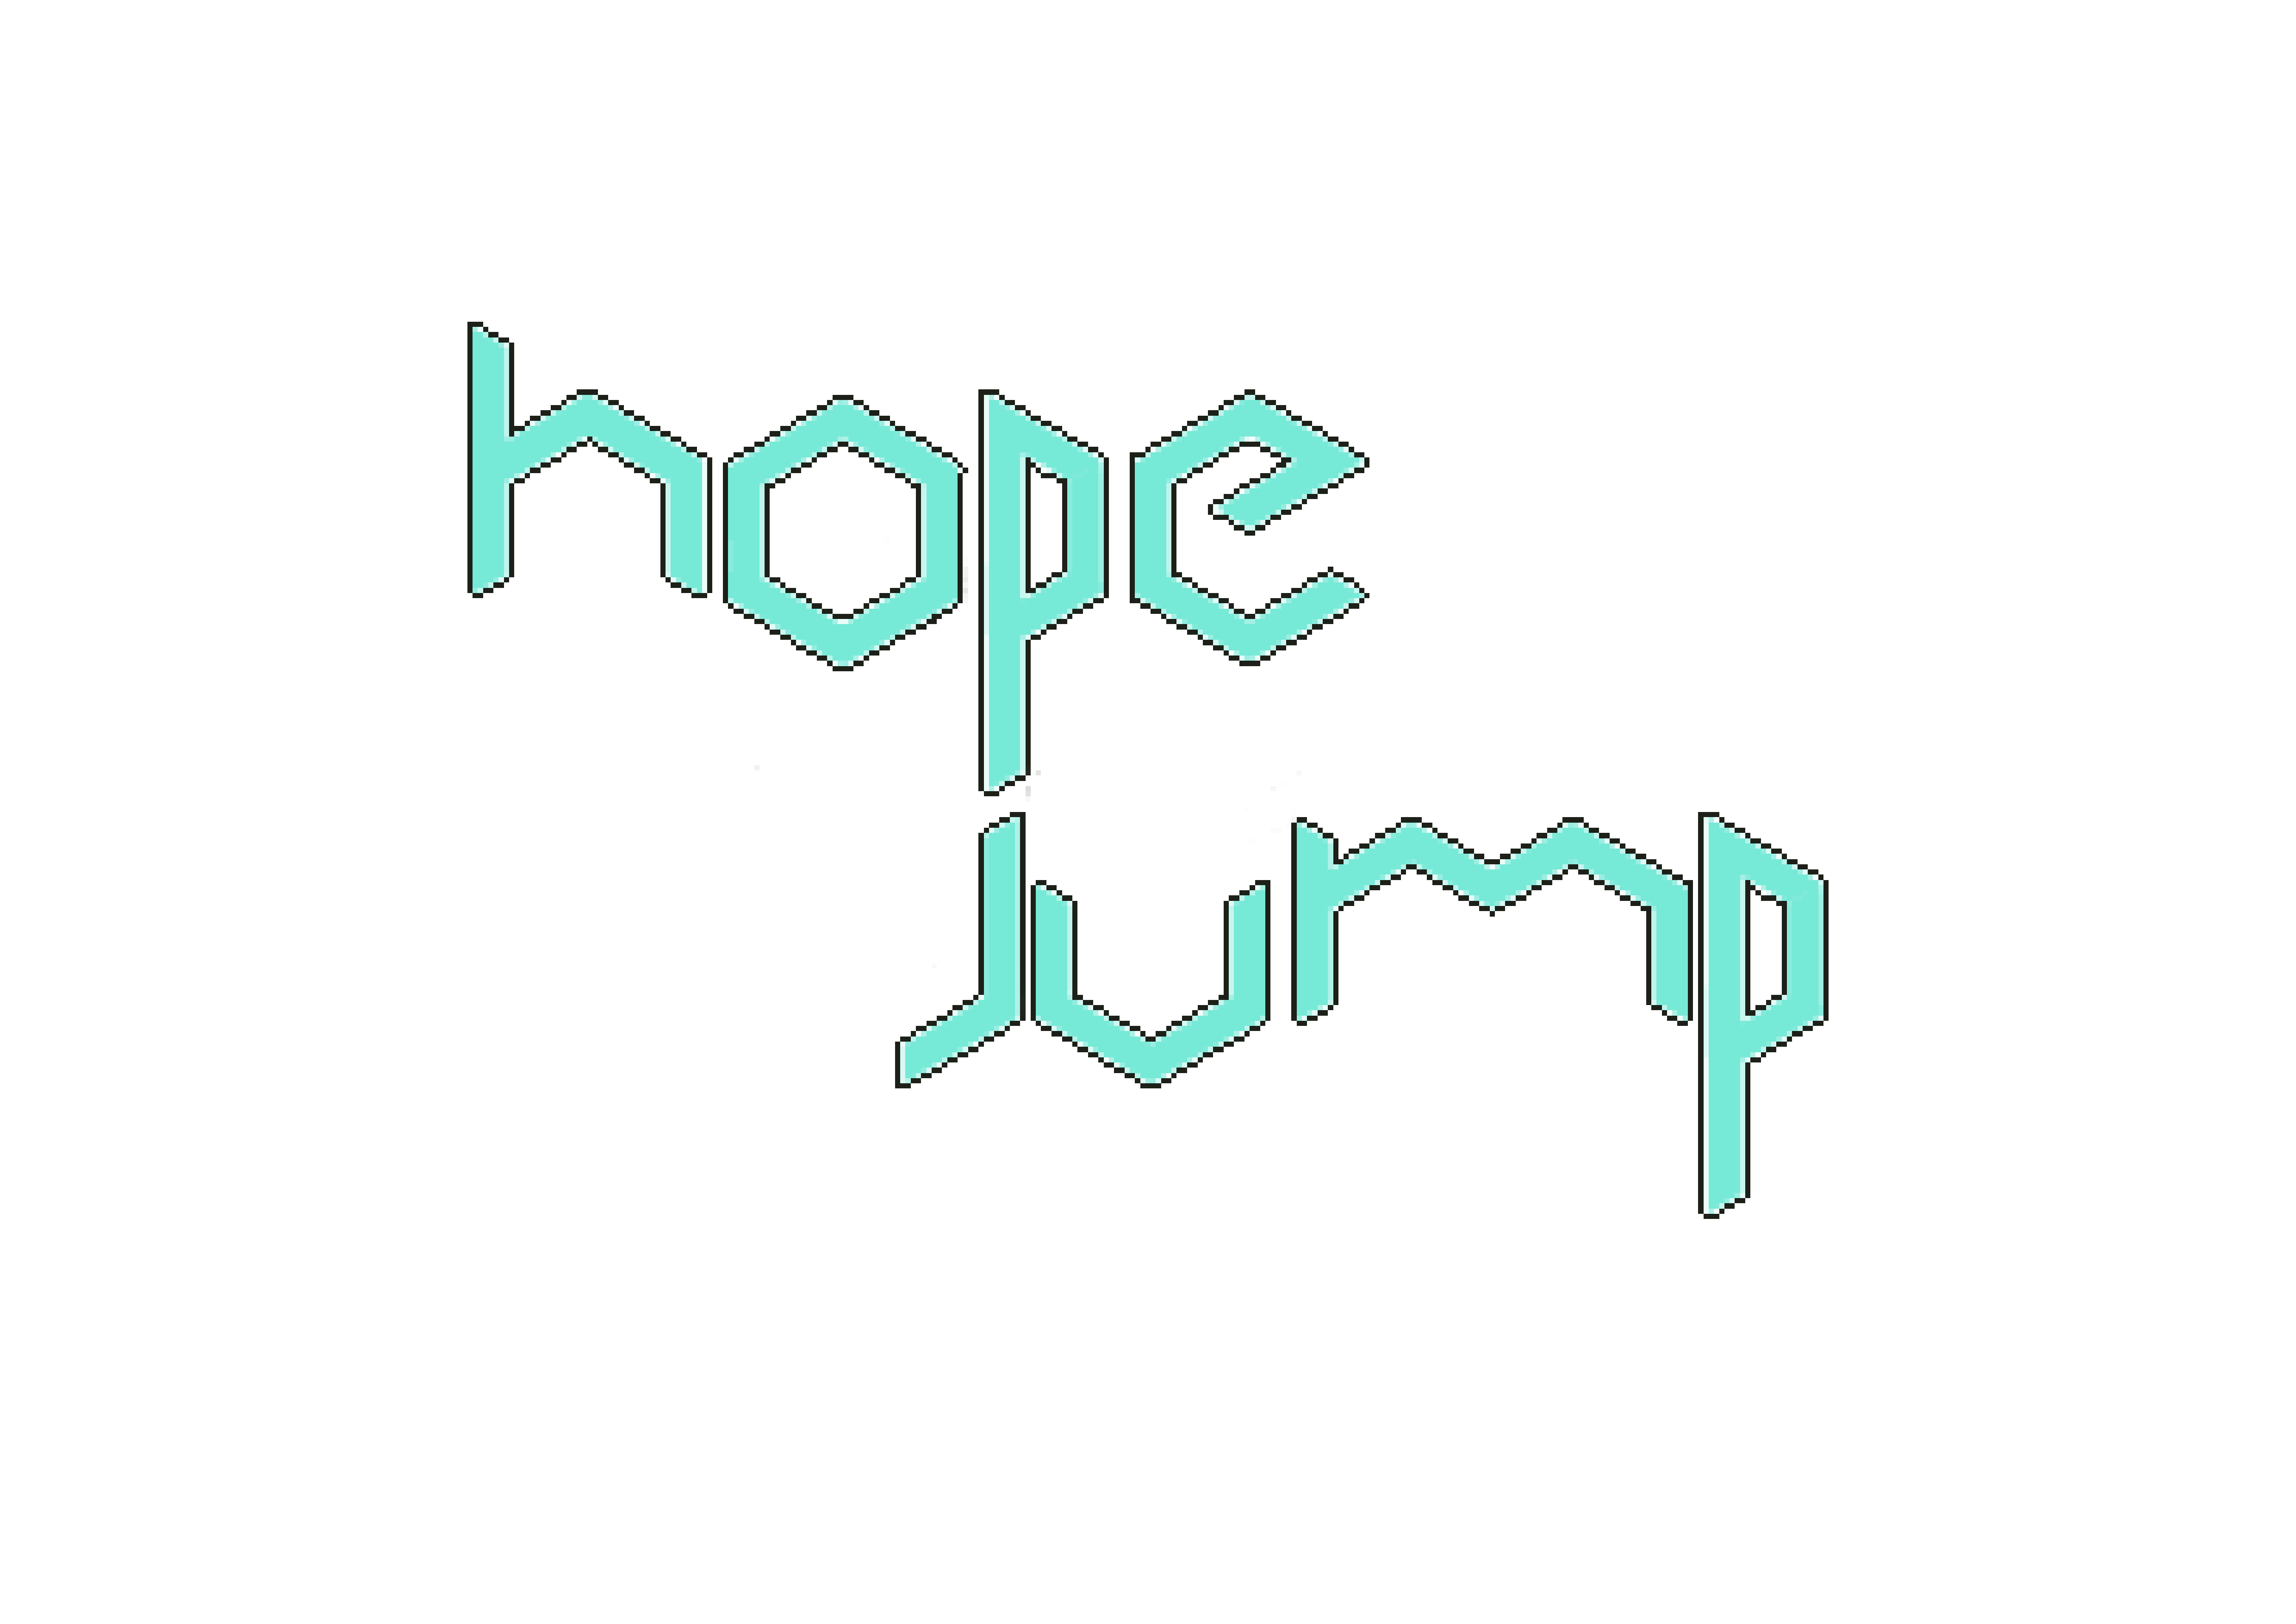 Hope Jump